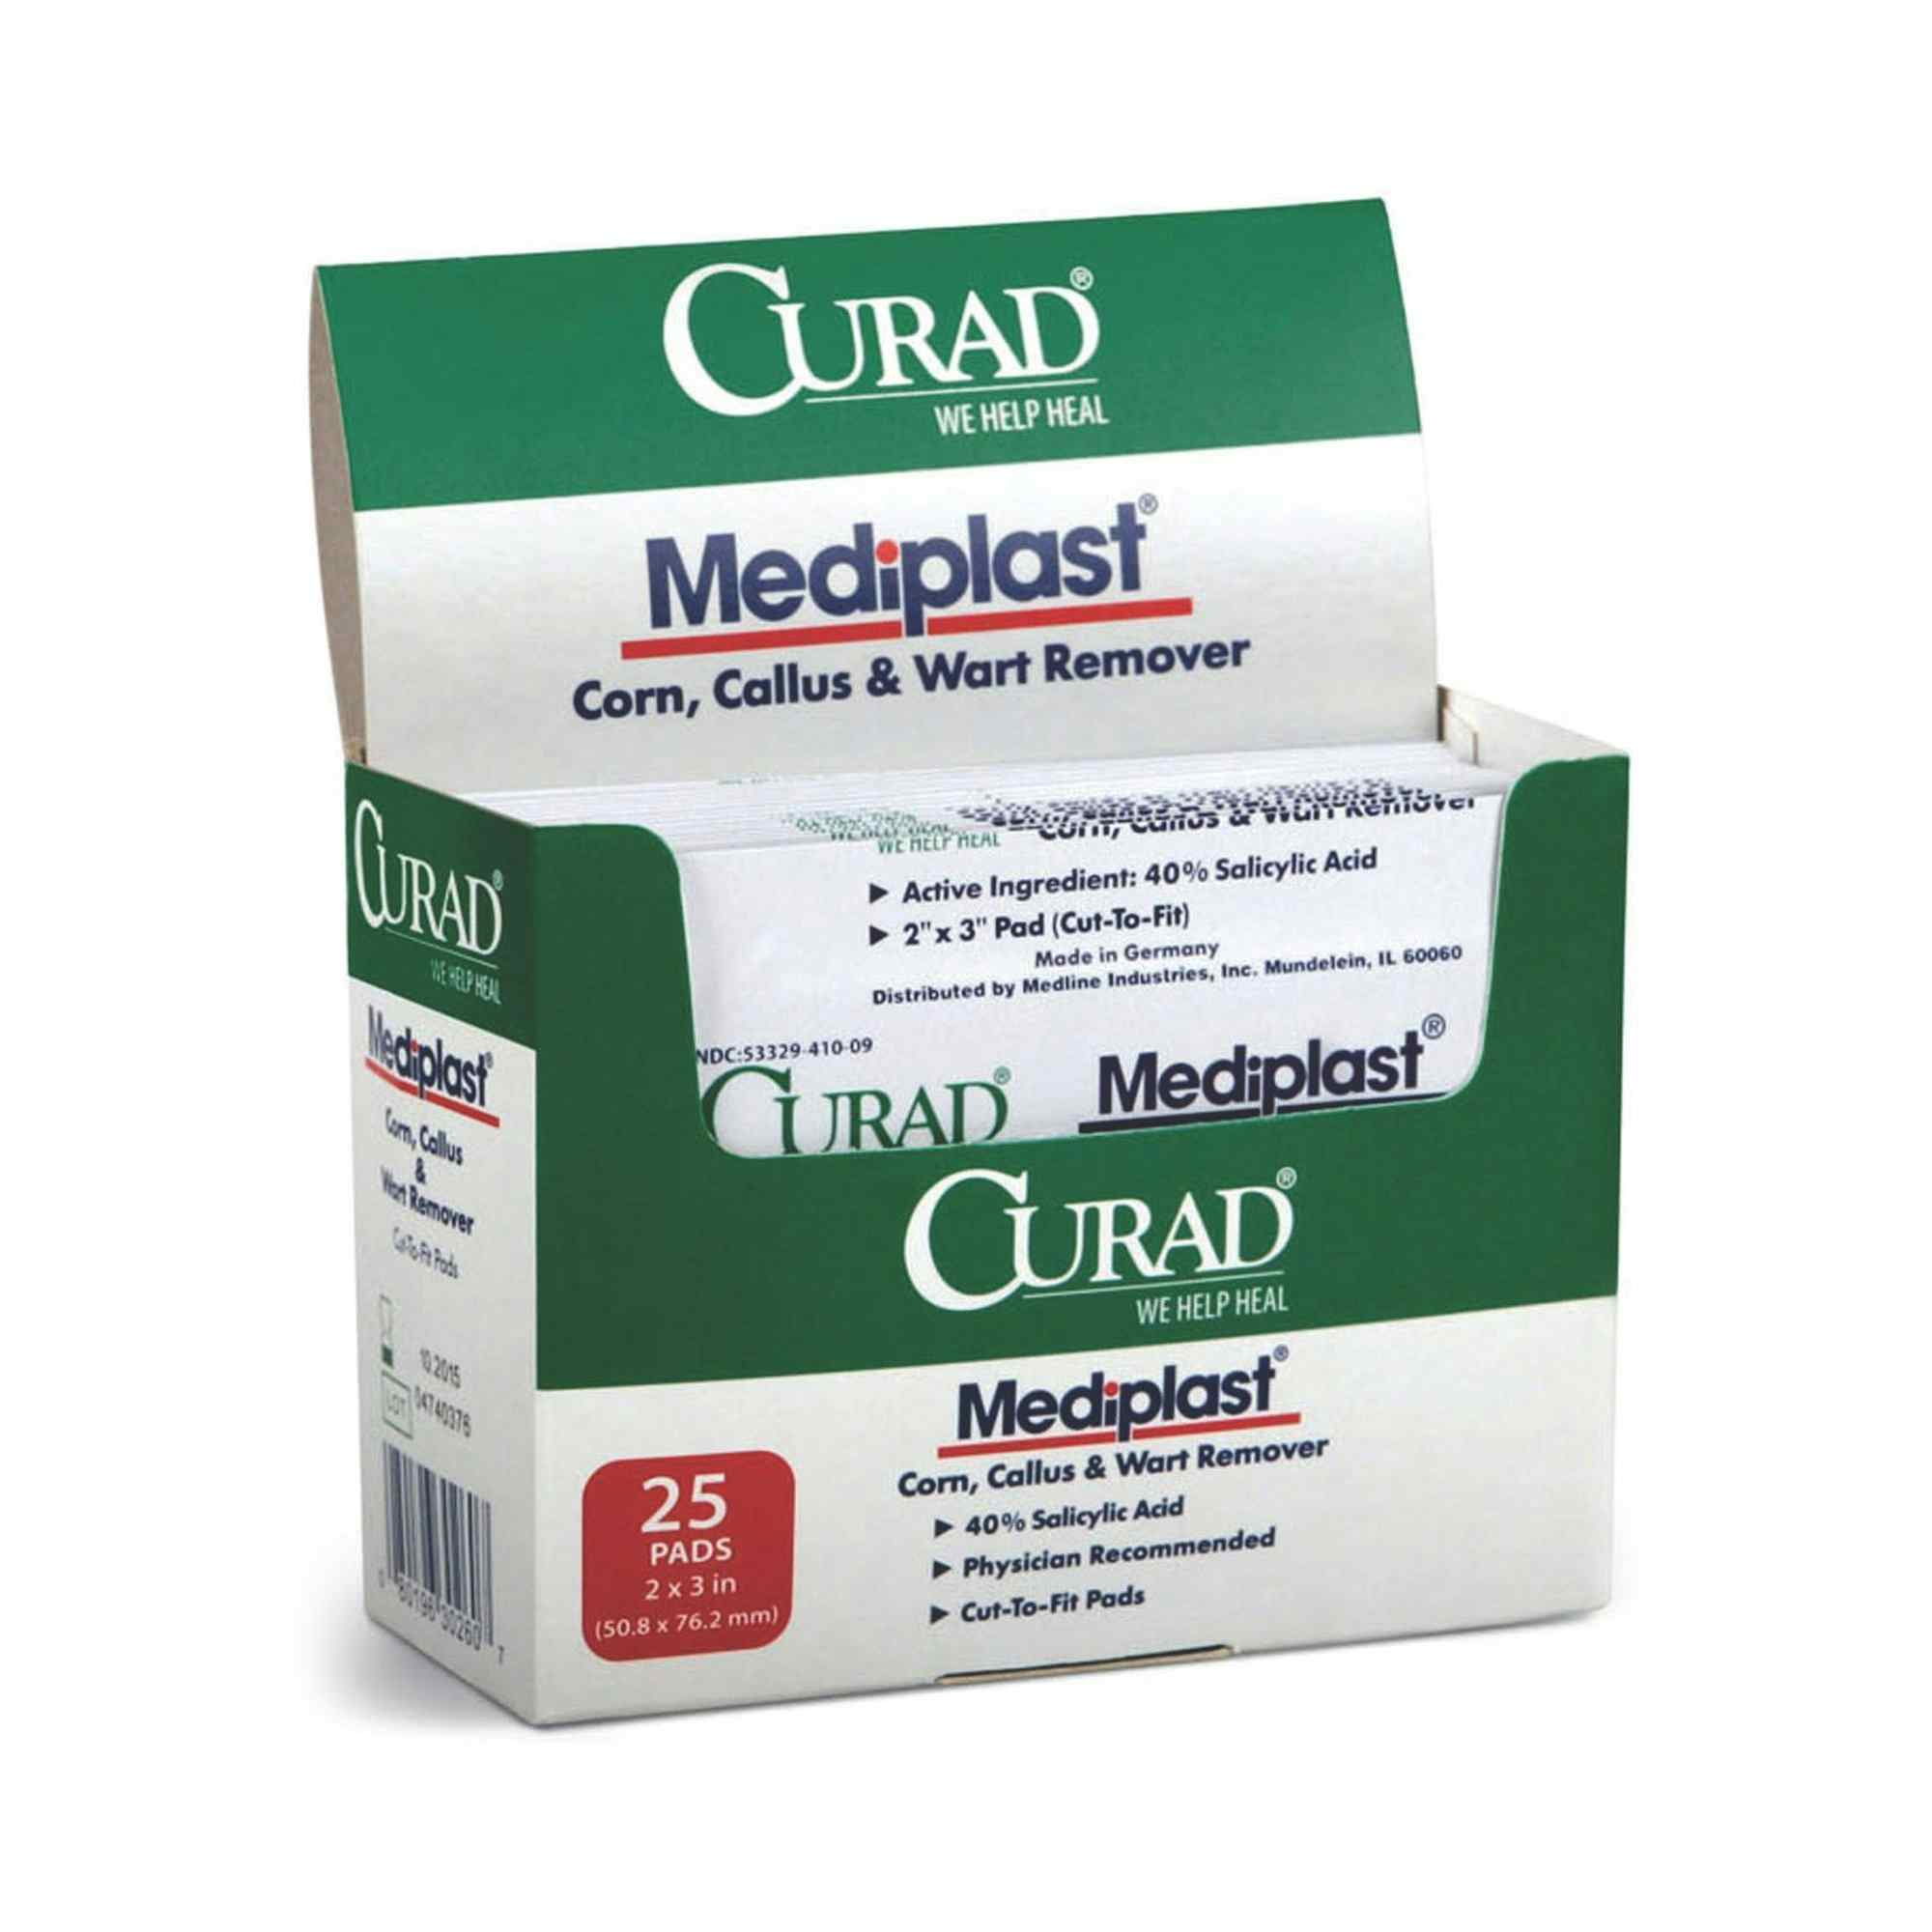 Curad MediPlast Corn, Callus & Wart Remover Pads